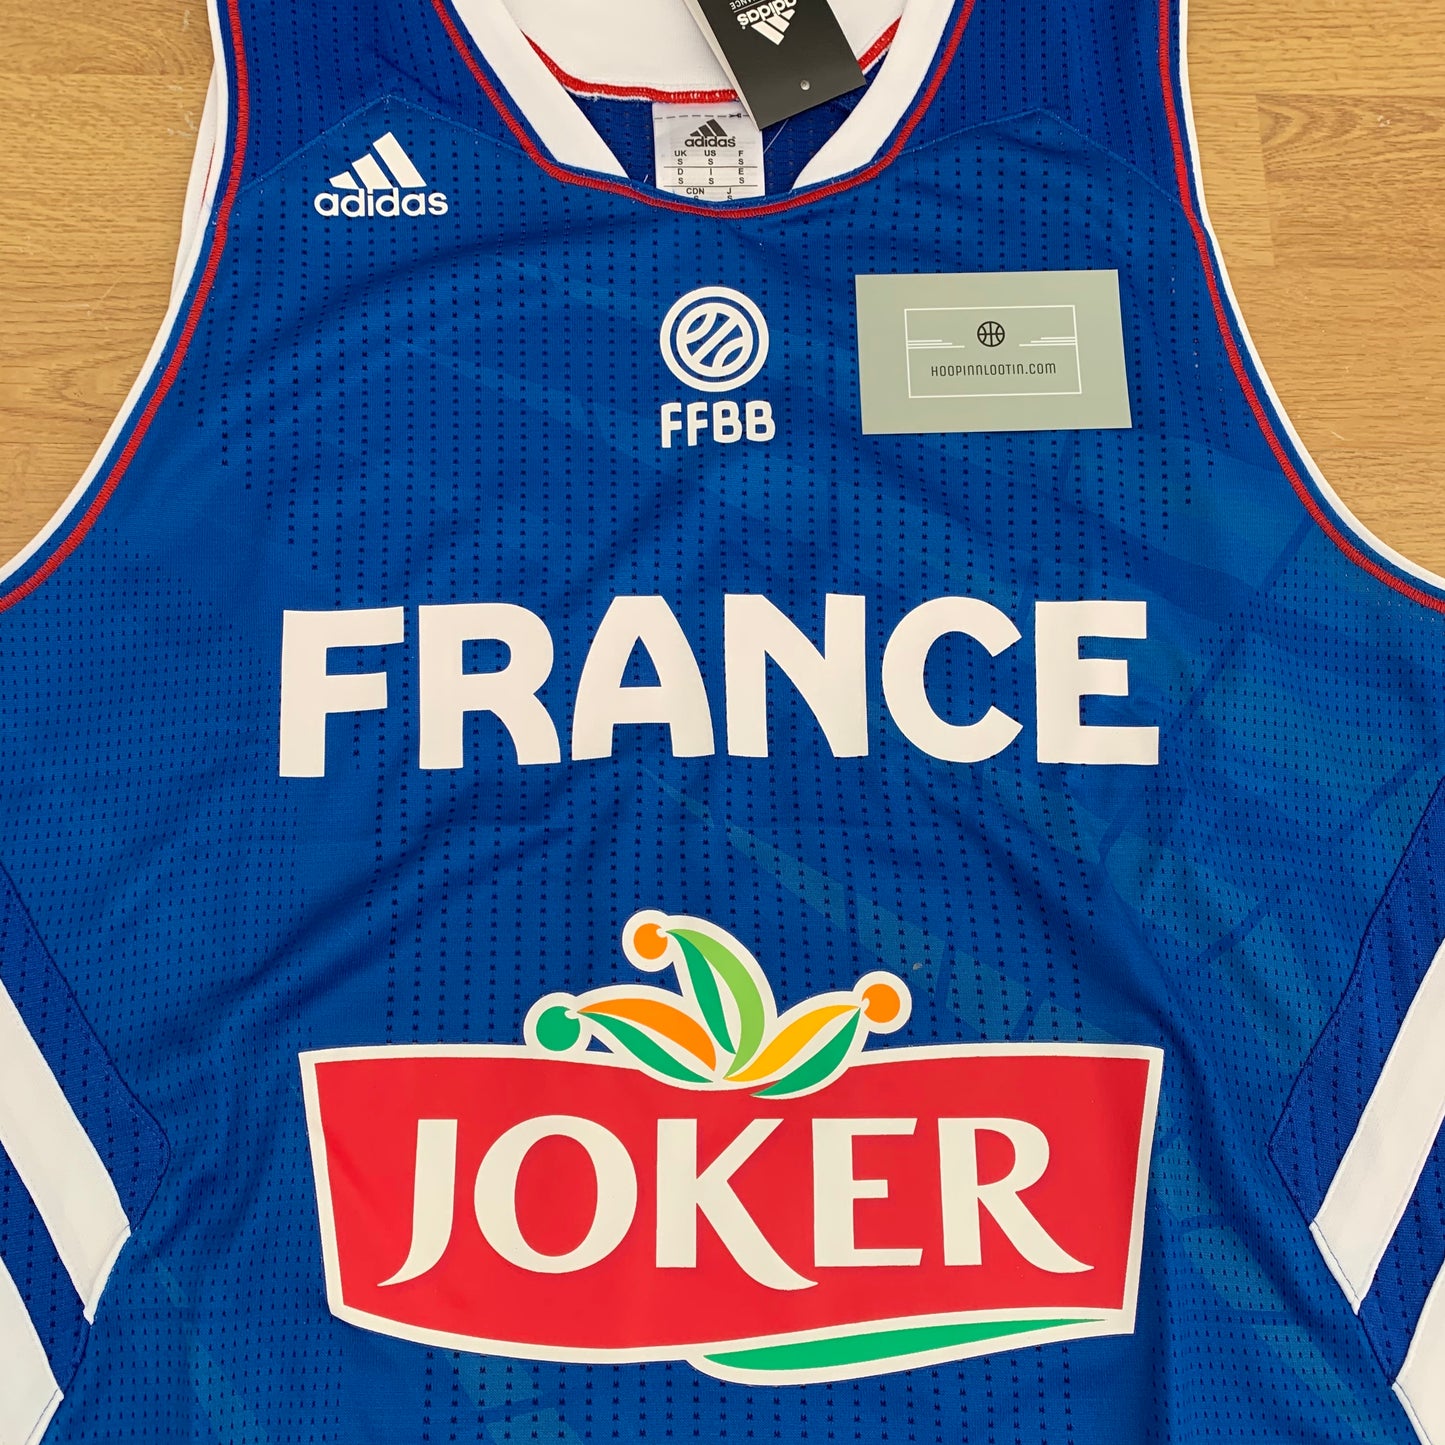 France National Team Adidas Jersey